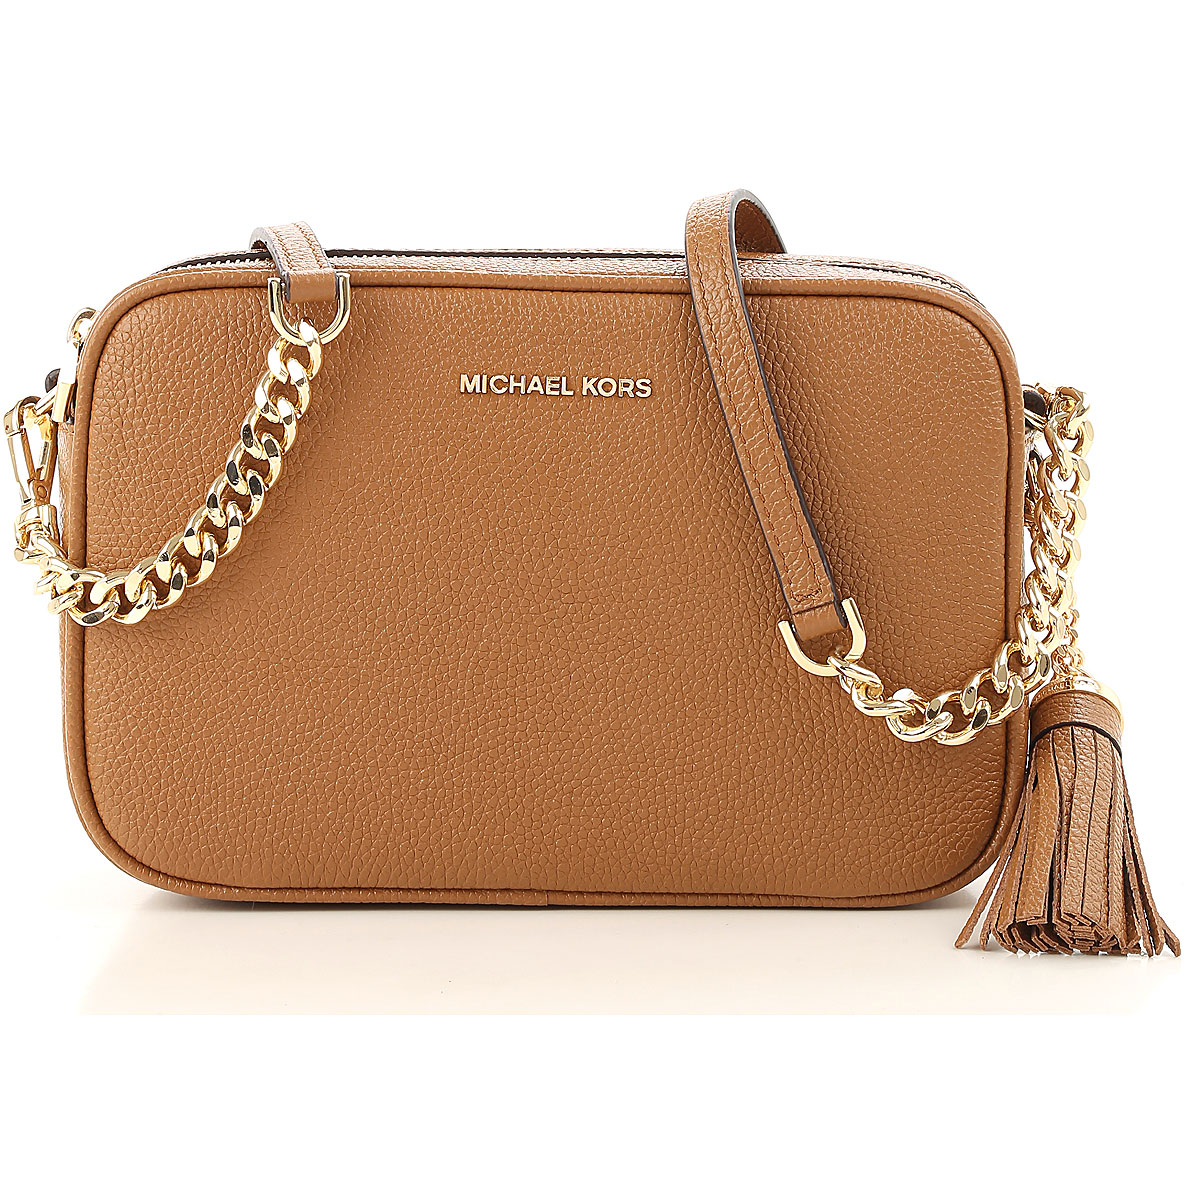 Handbags Michael Kors, Style code: 32f7ggnm8l-acorn-A850